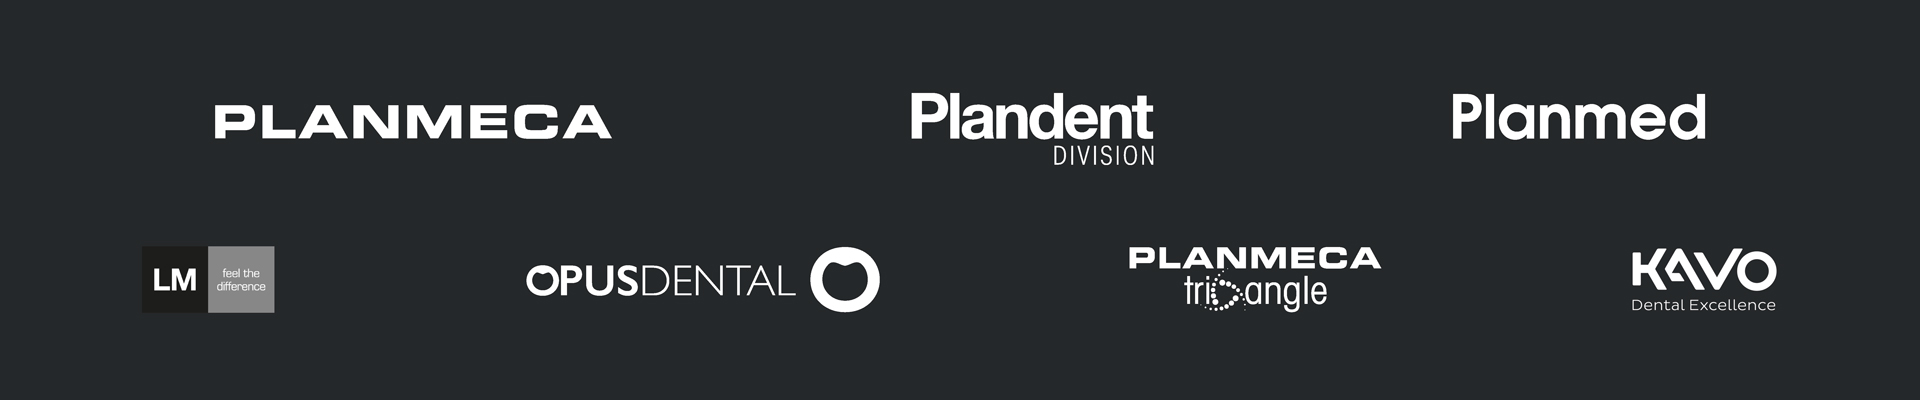 pm-group-plandent-5.jpg